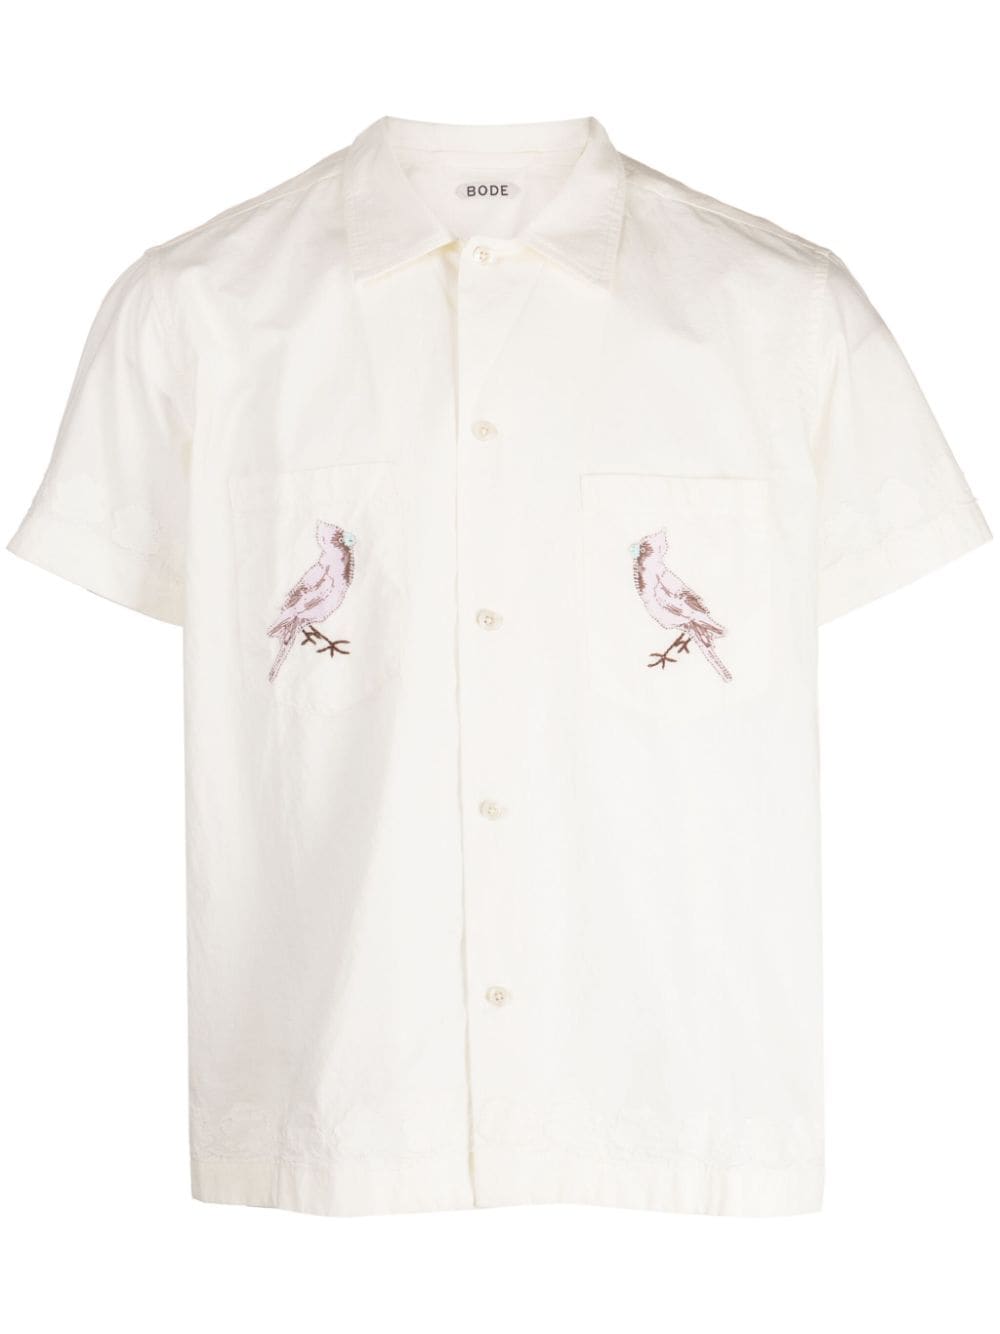 BODE embroidered short-sleeve shirt - White